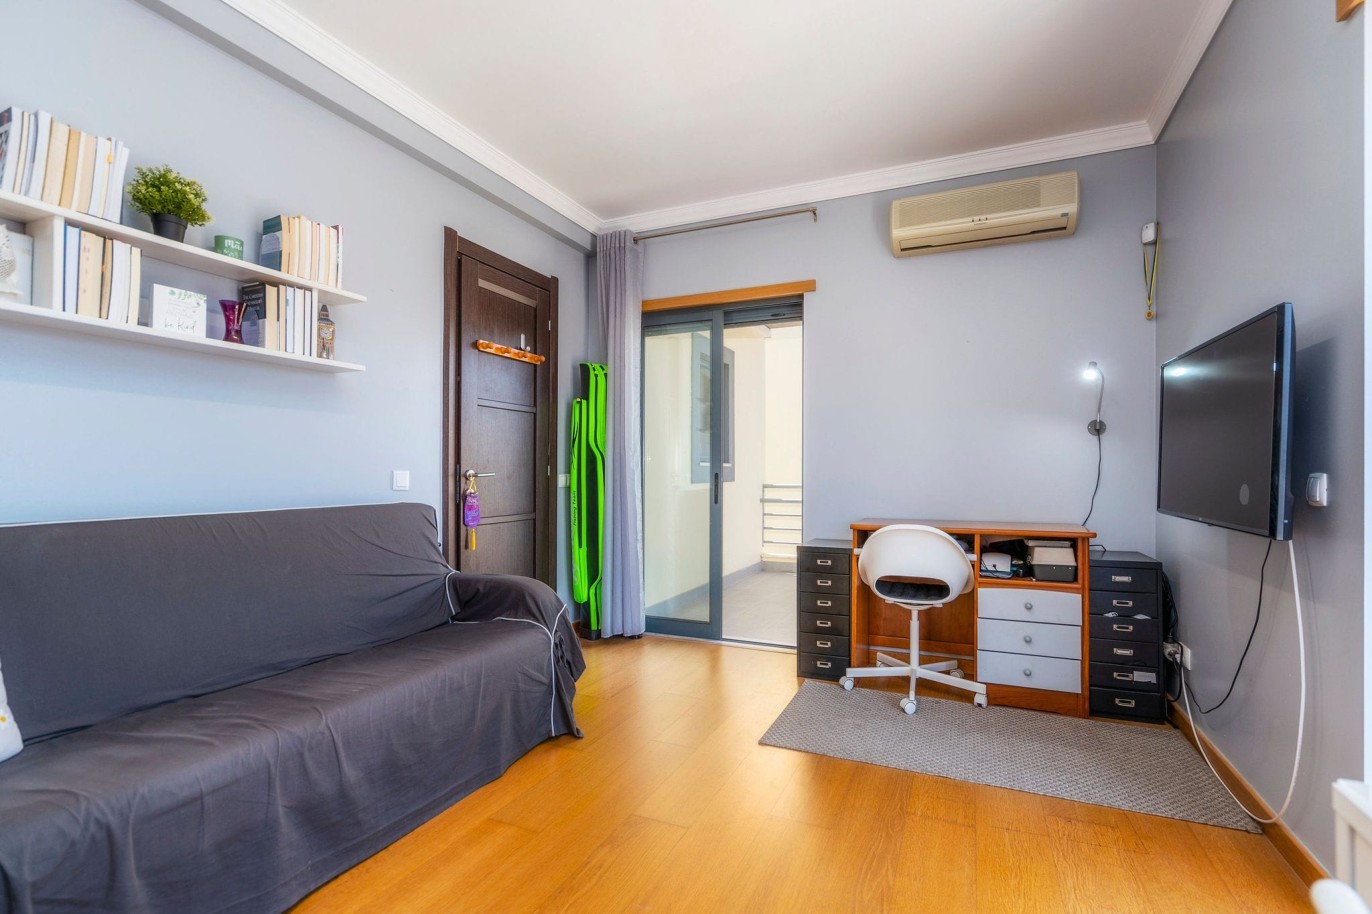 3+1 bedroom villa & 2 bedroom apartment for sale in Quarteira, Algarve_240755